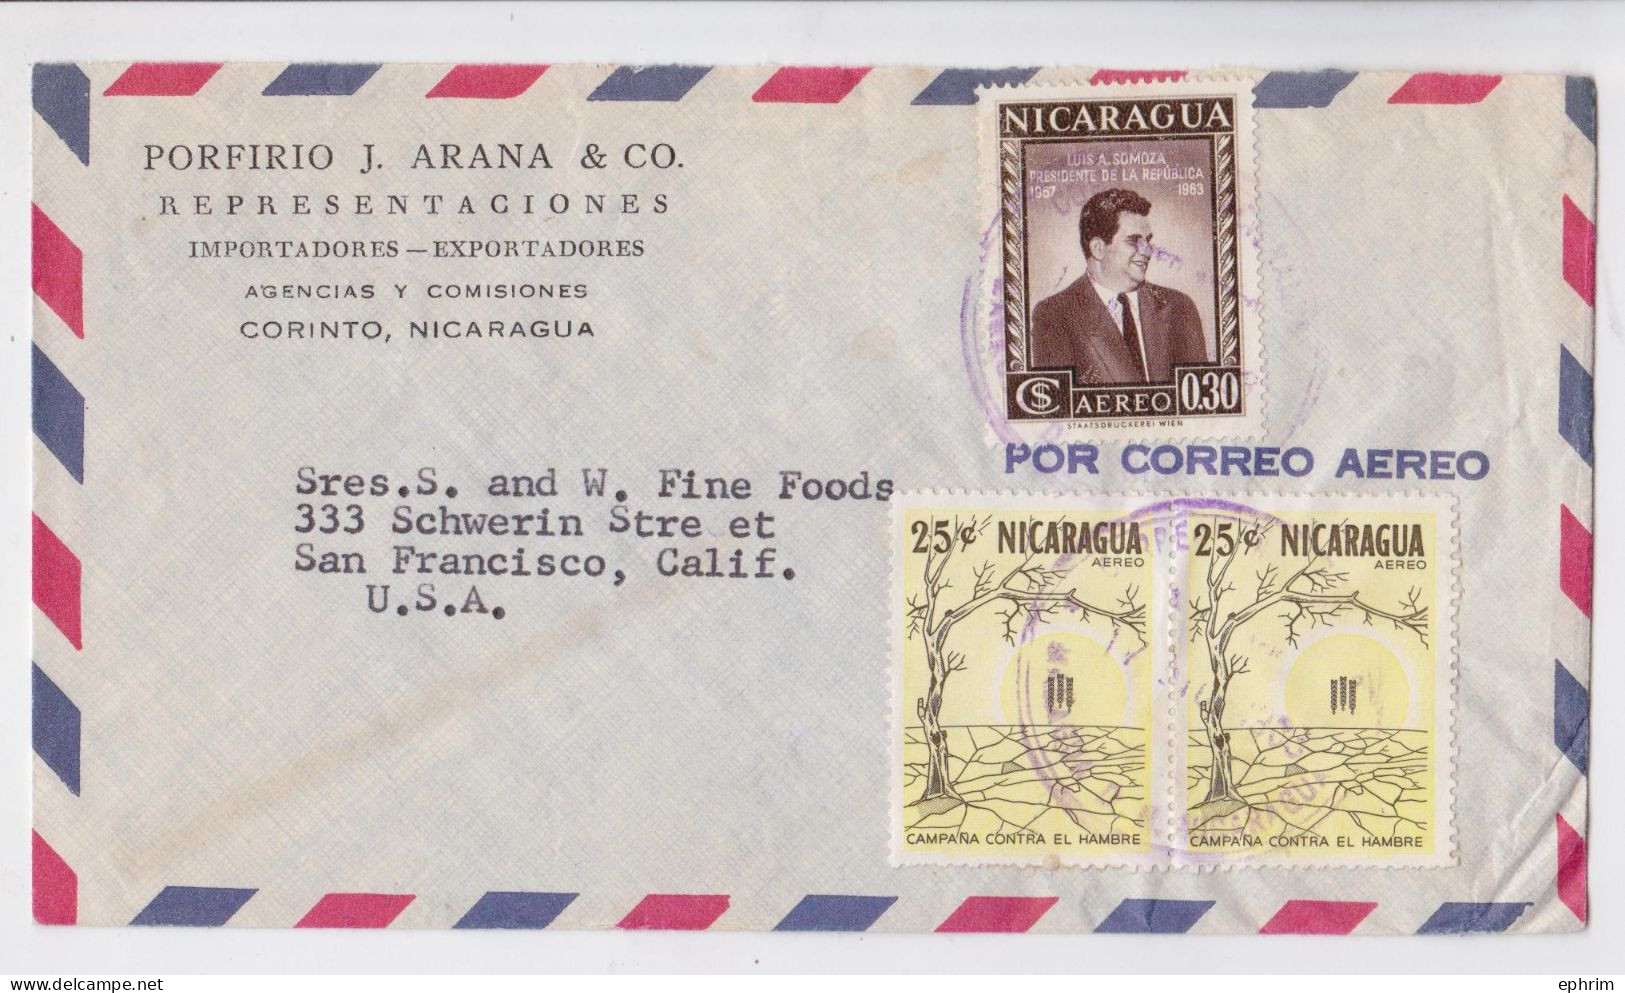 Nicaragua Corinto Lettre Timbre Stamp X3 Air Mail Cover Sello Campana Contra El Hambre Presidente Somoza Correo Aereo - Nicaragua